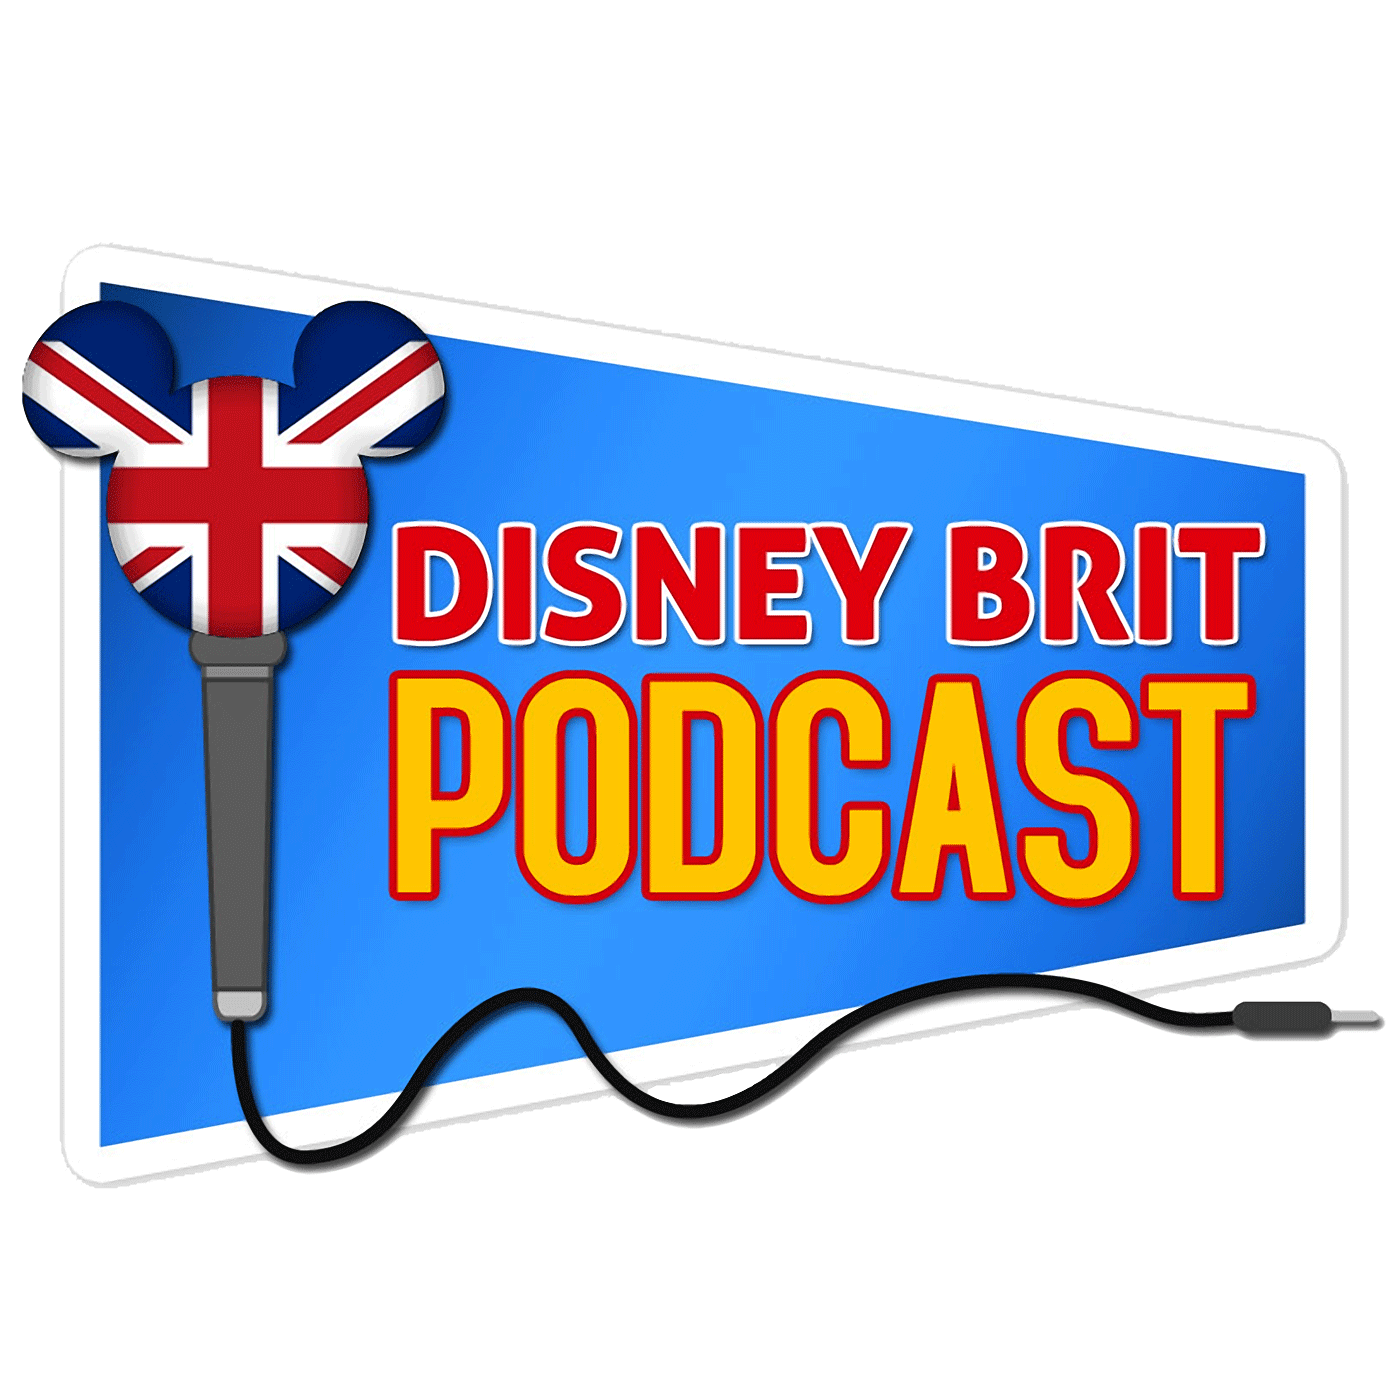 Disneybrit Podcast - Episode 112